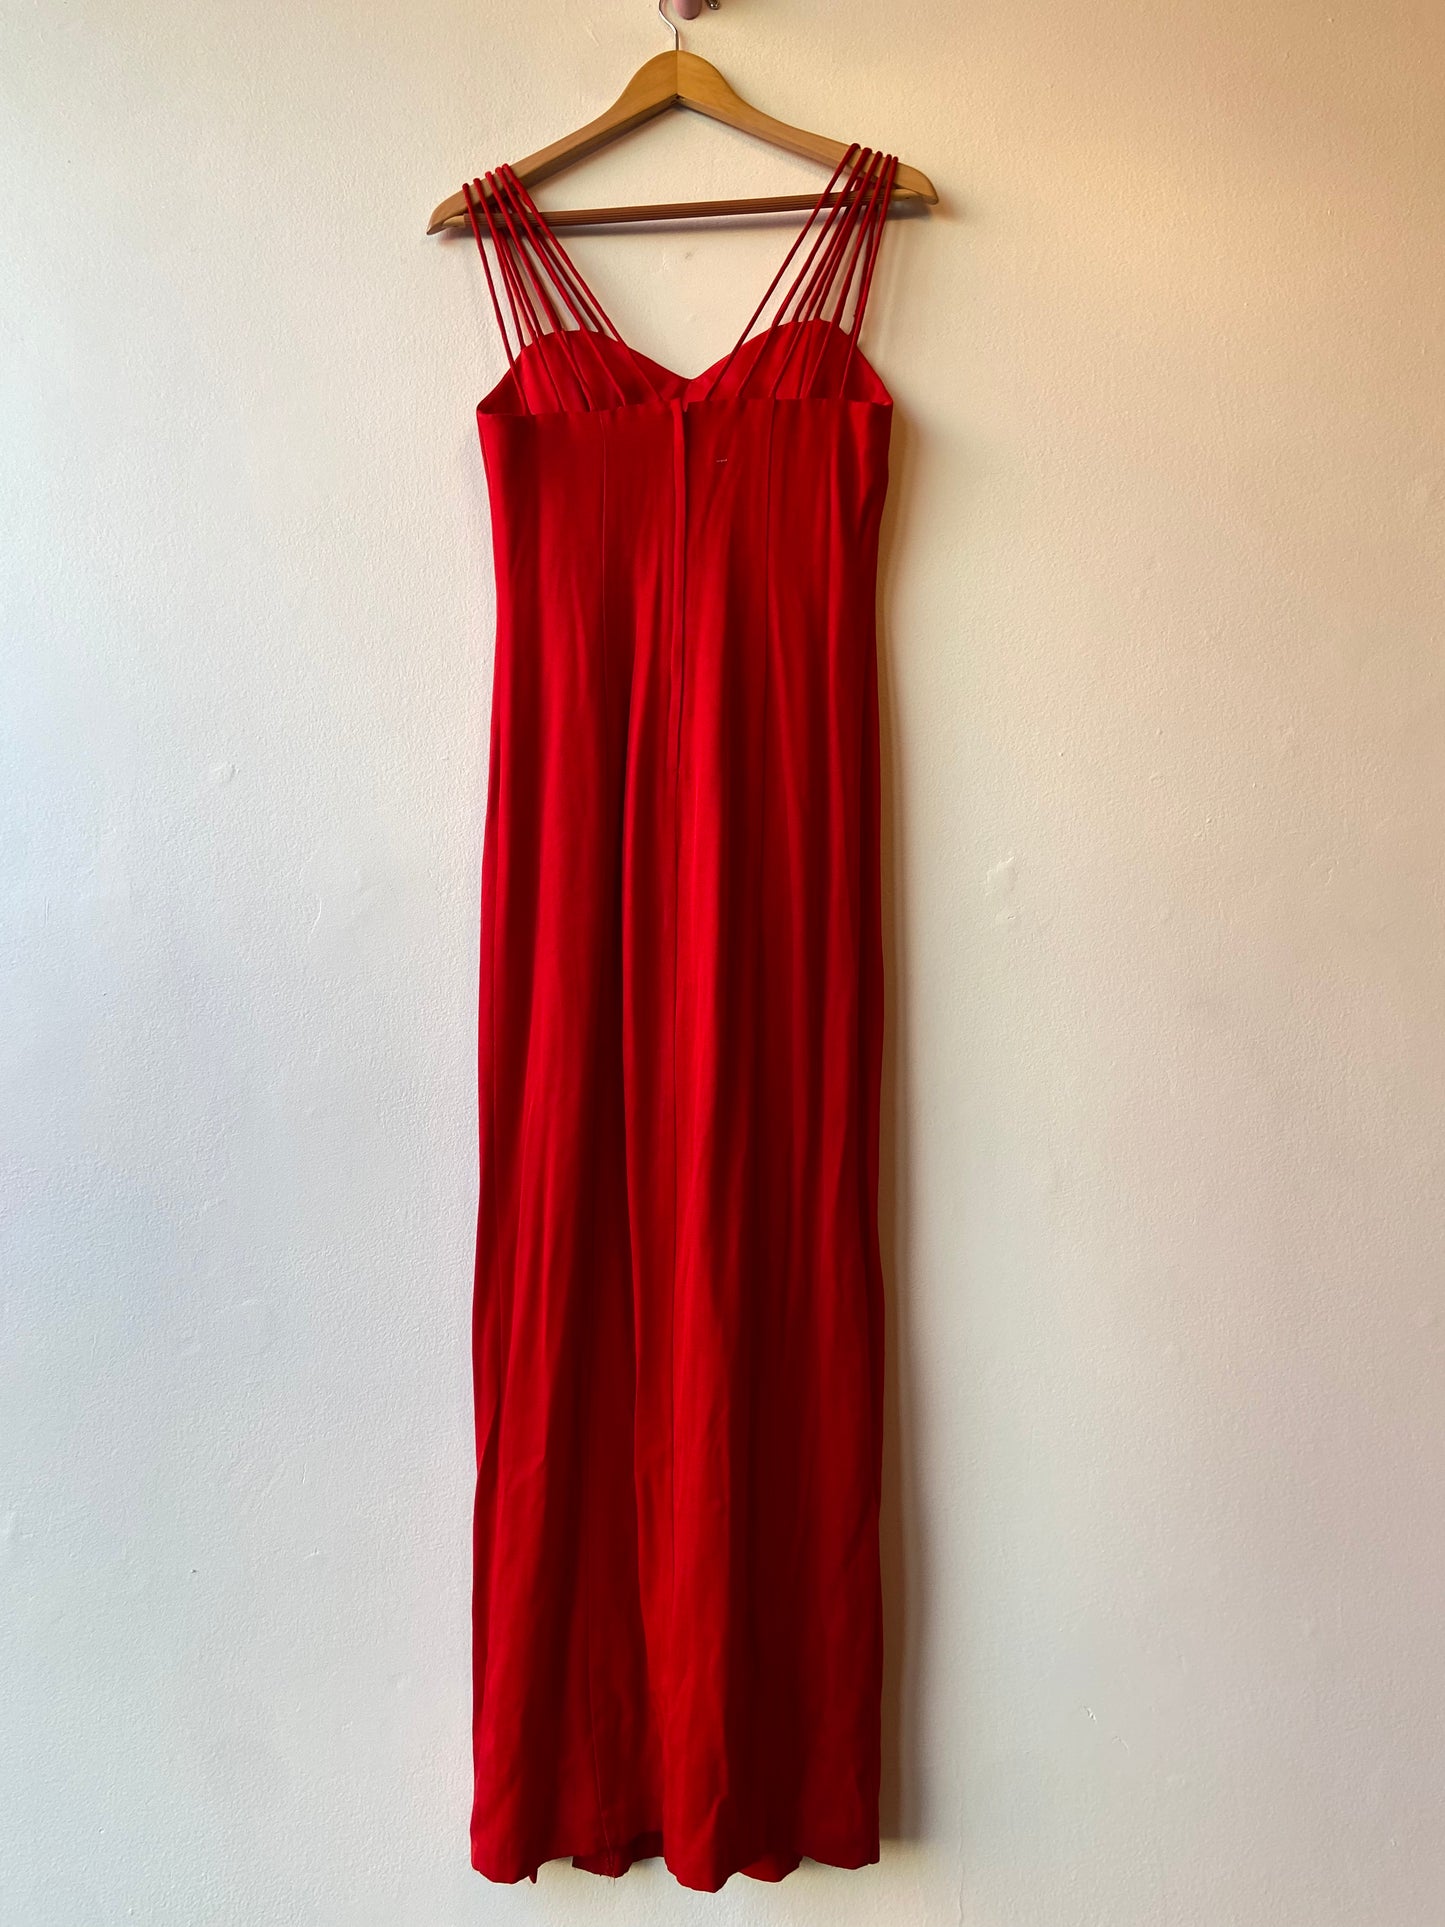 90’s Racy Red Dress